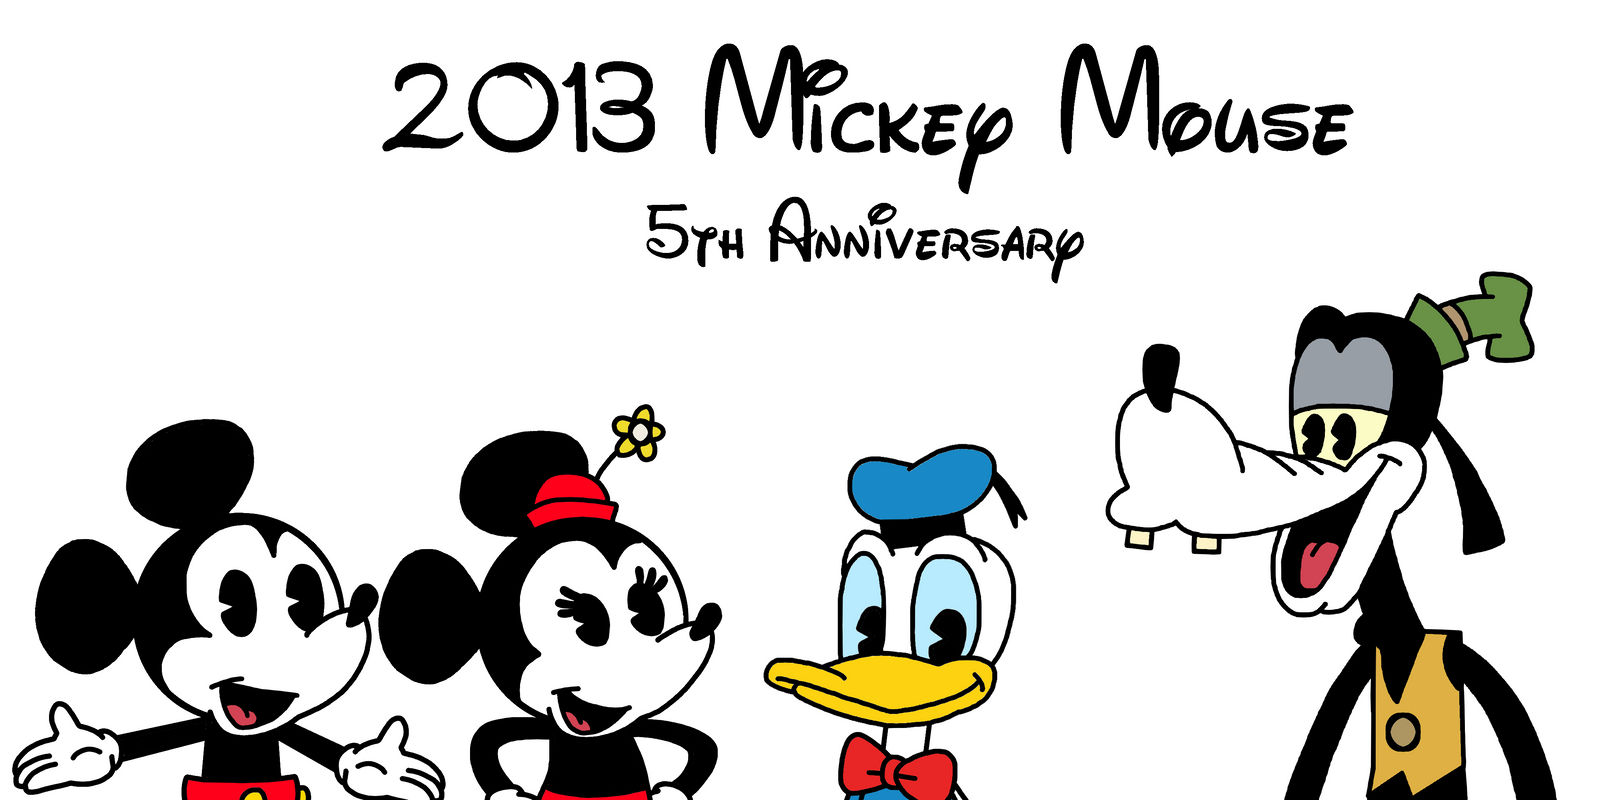 2013 Mickey Mouse - 5th Anniversary by Ultra-Shounen-Kai-Z on DeviantArt